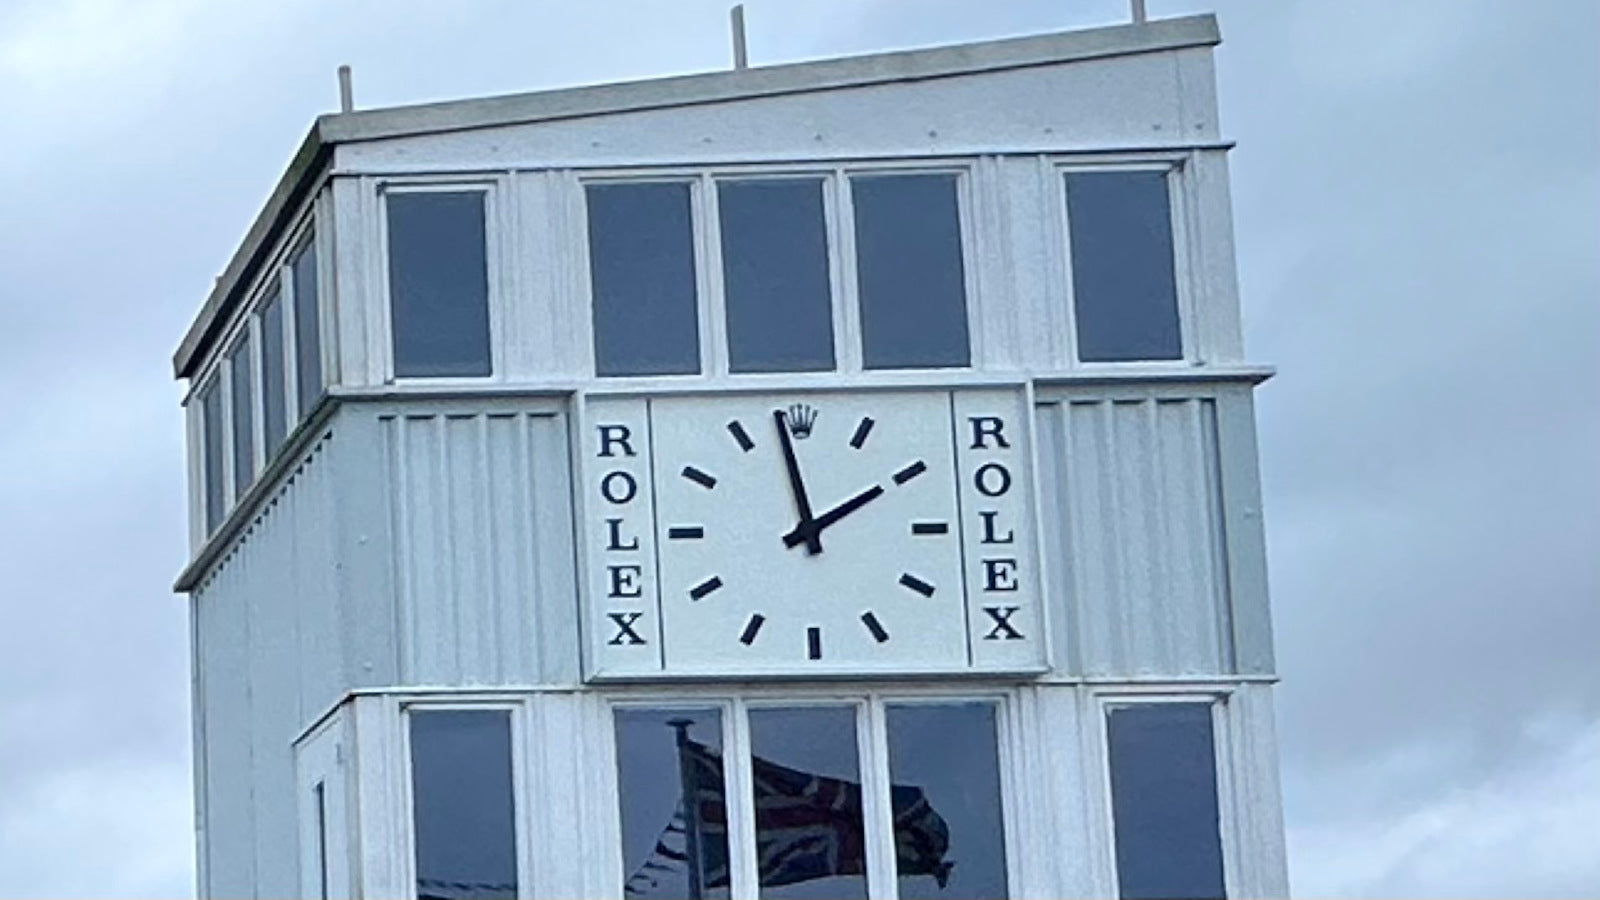 Rolex Clock Tower at Goodwood